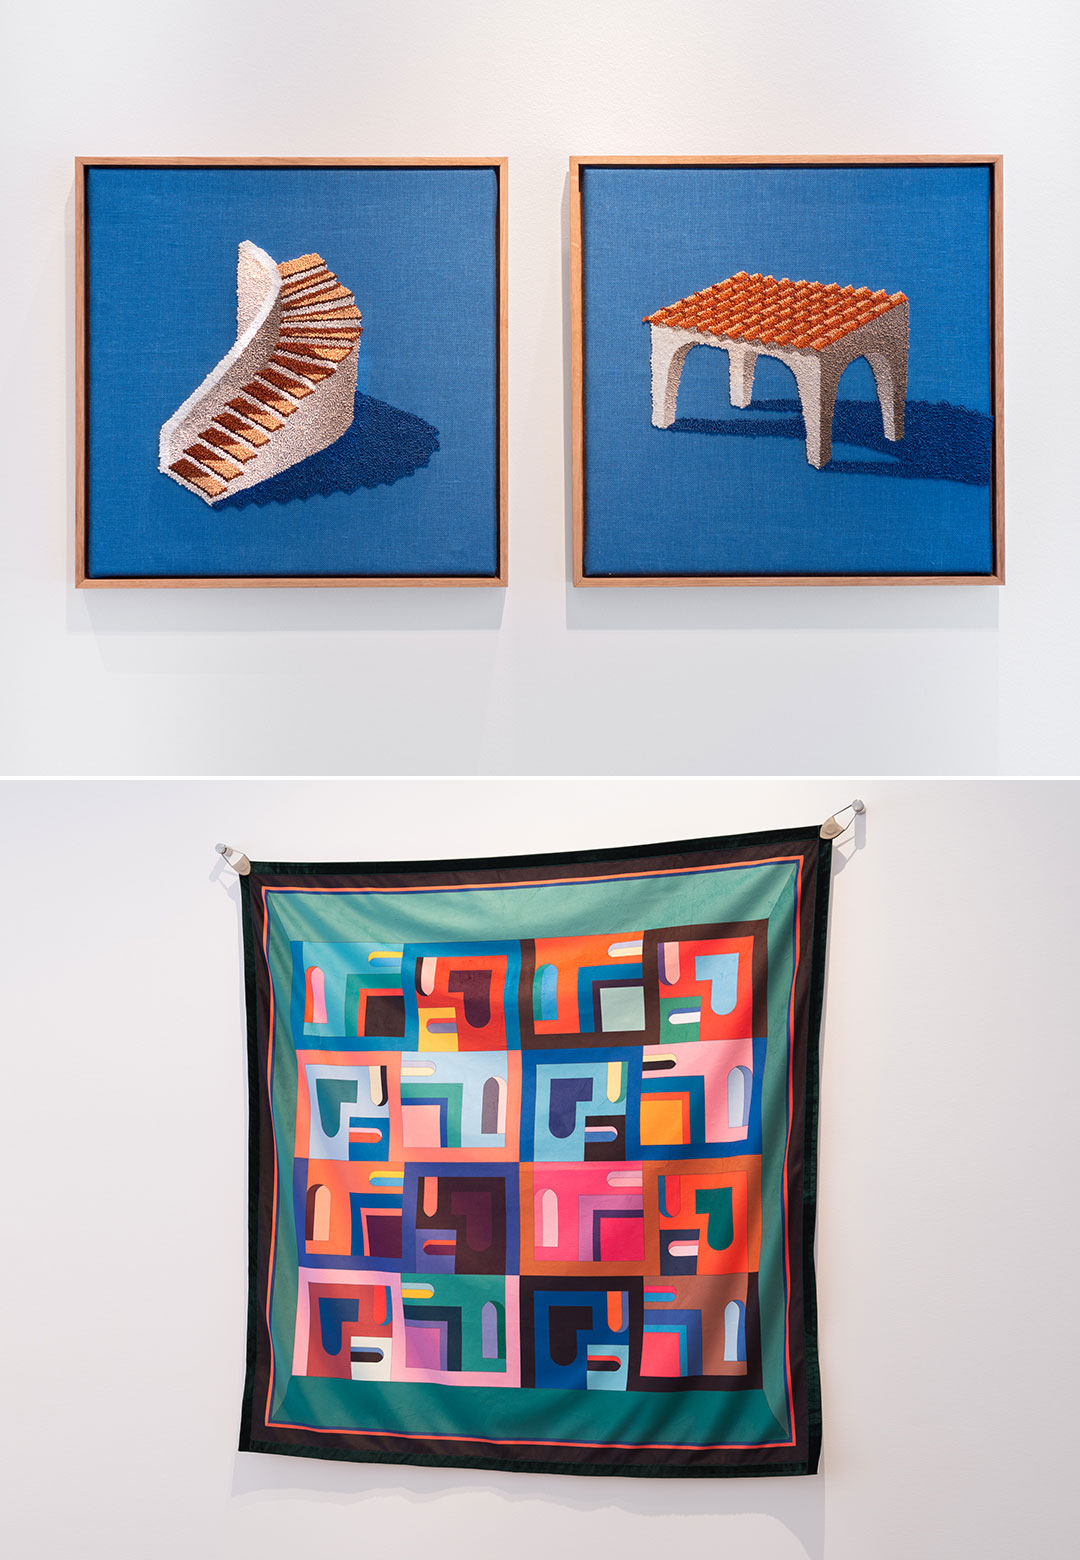 ‘Artifacts’ at DesignTO explores architecture and memory through fibre art